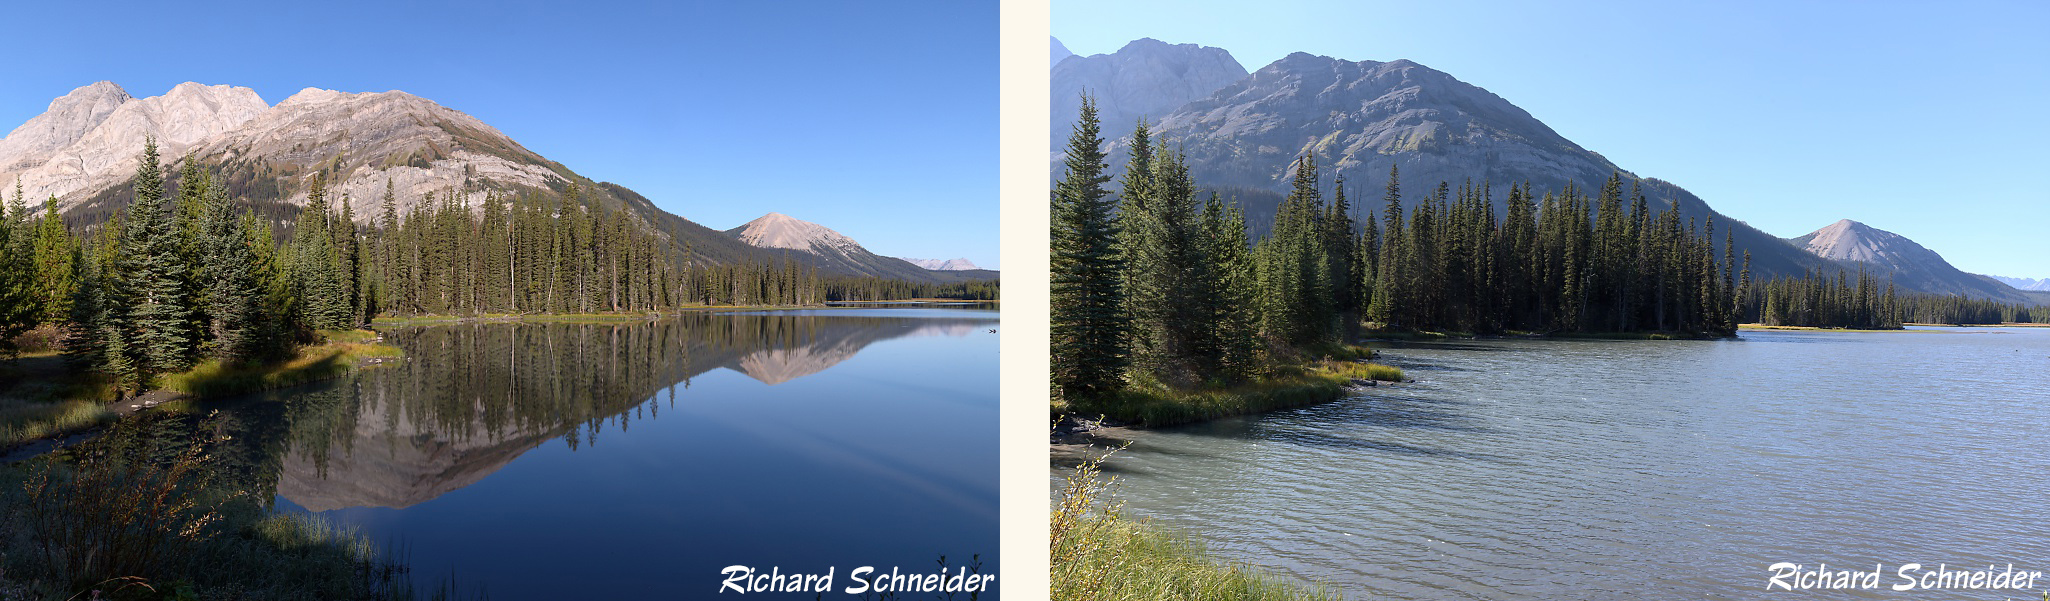 Mud lake compare 2 - R Schneider